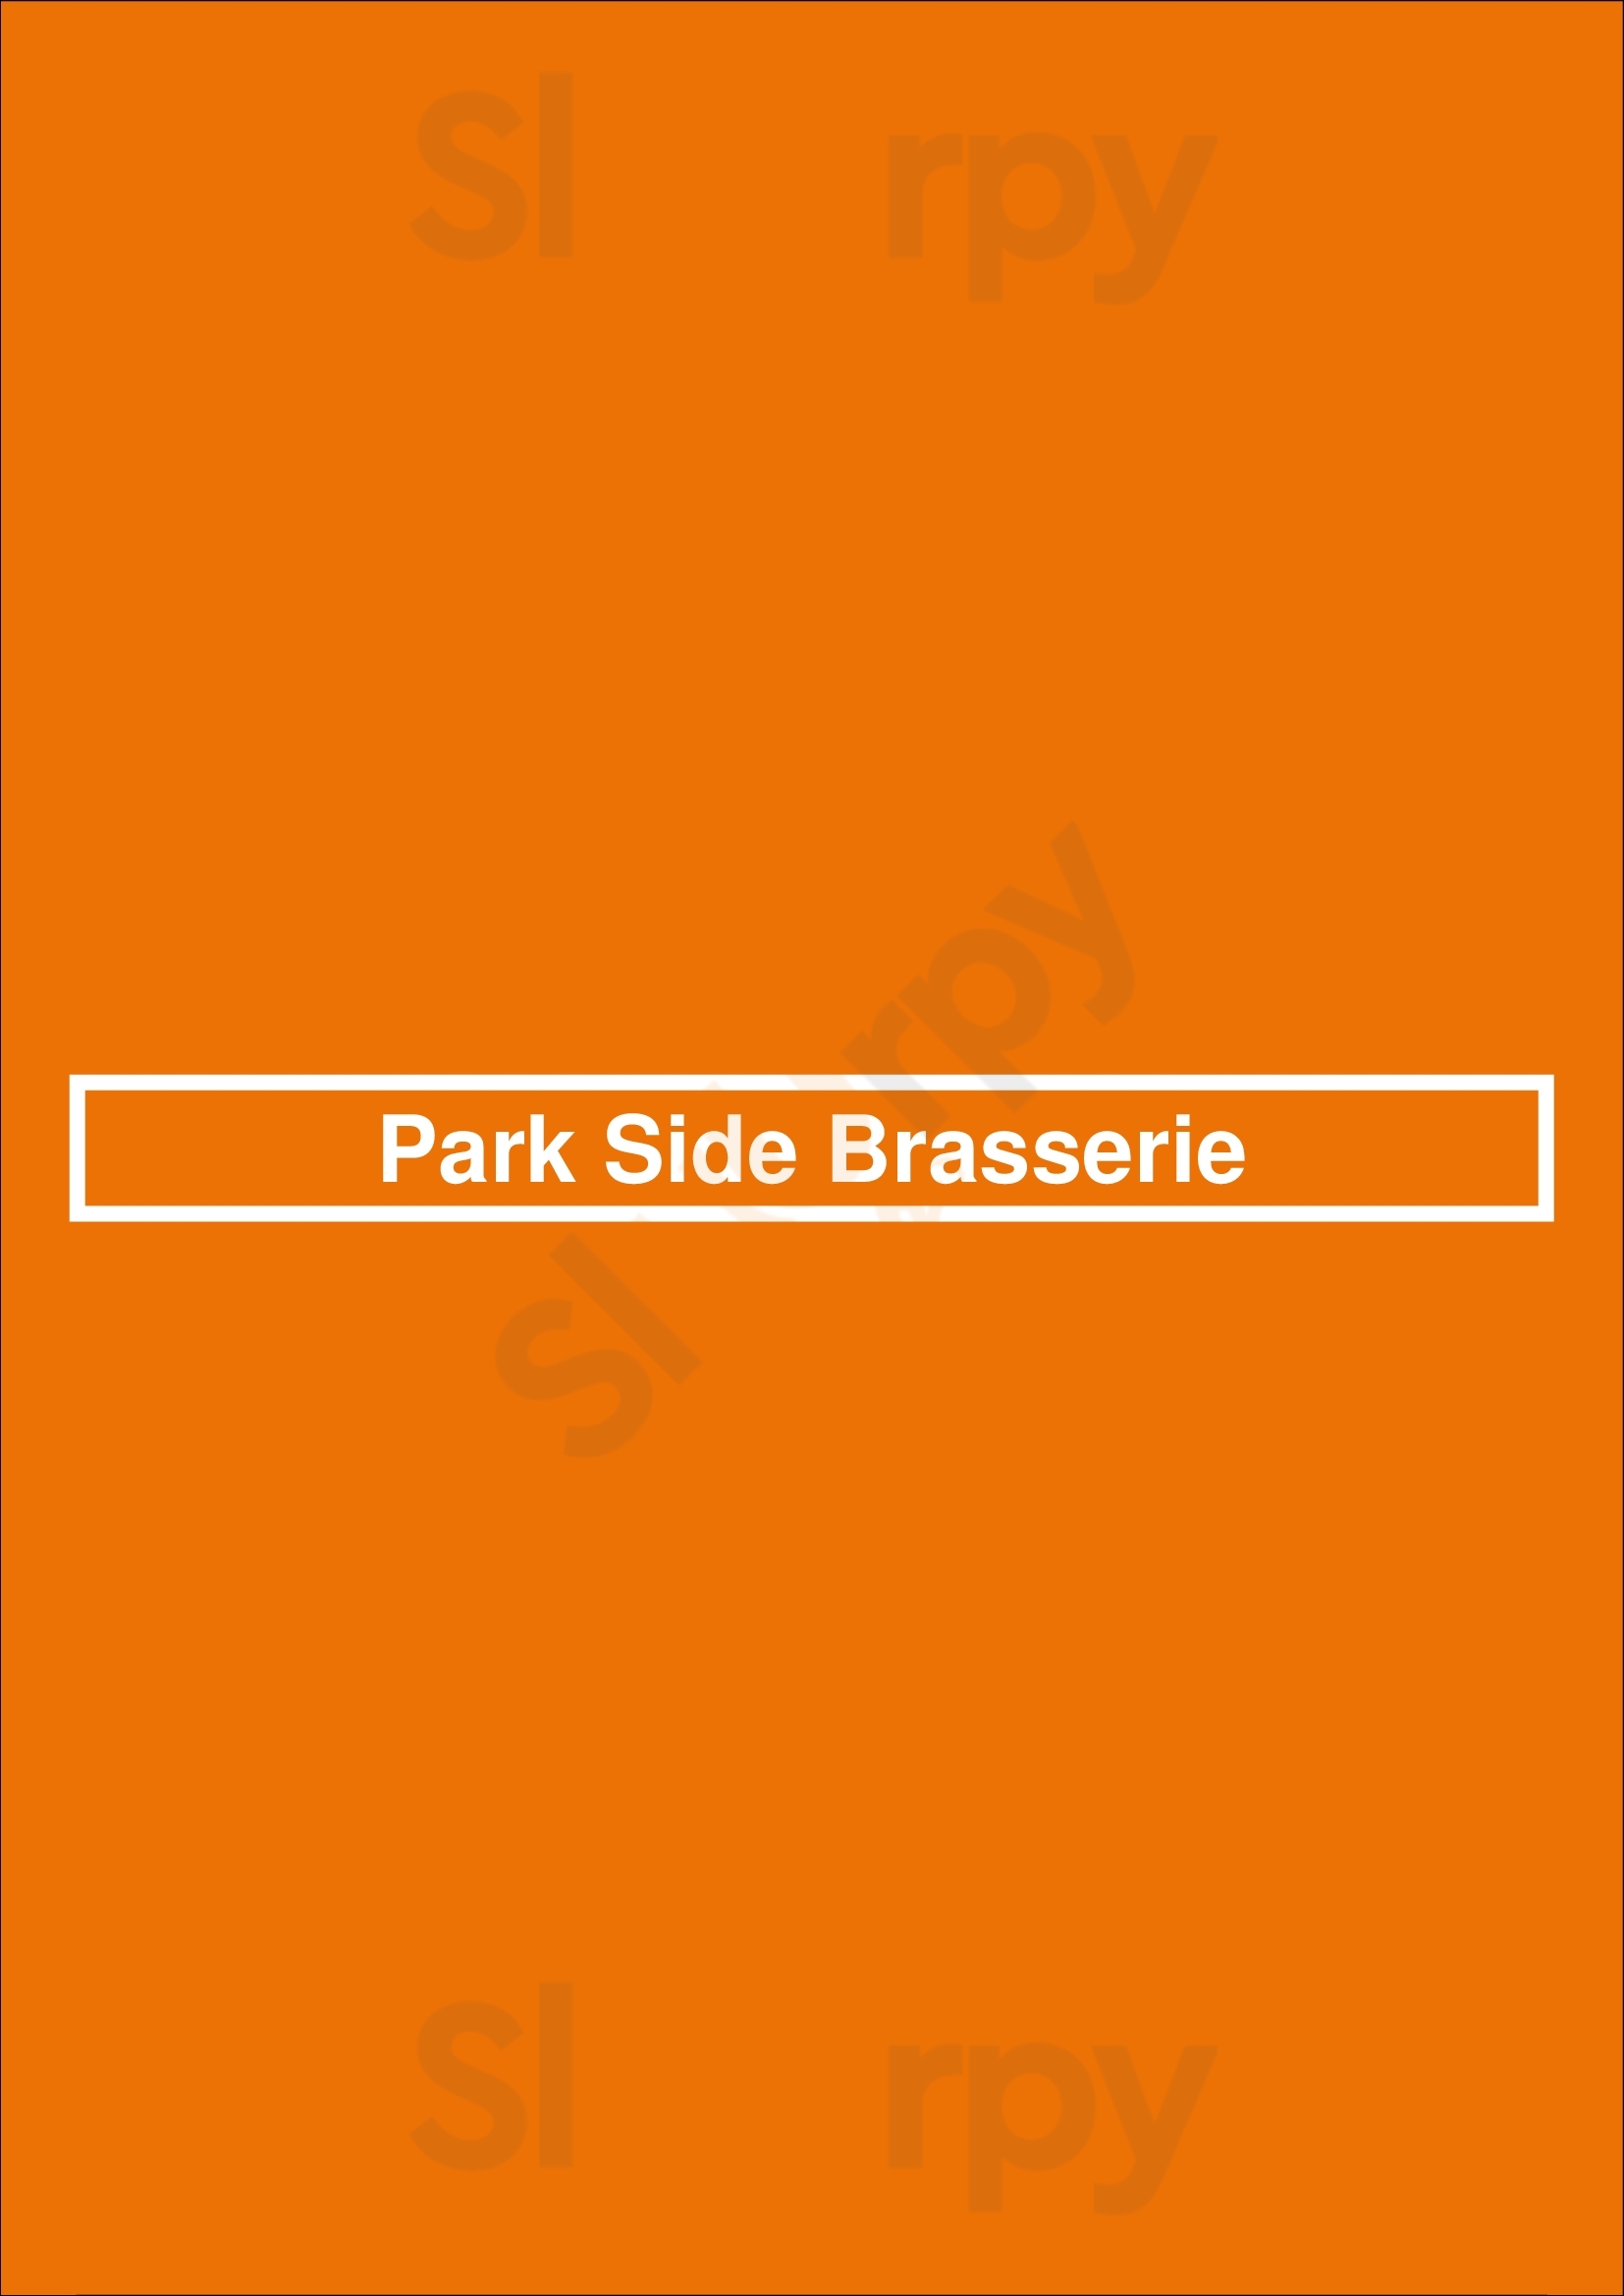 Park Side Brasserie Bruxelles Menu - 1